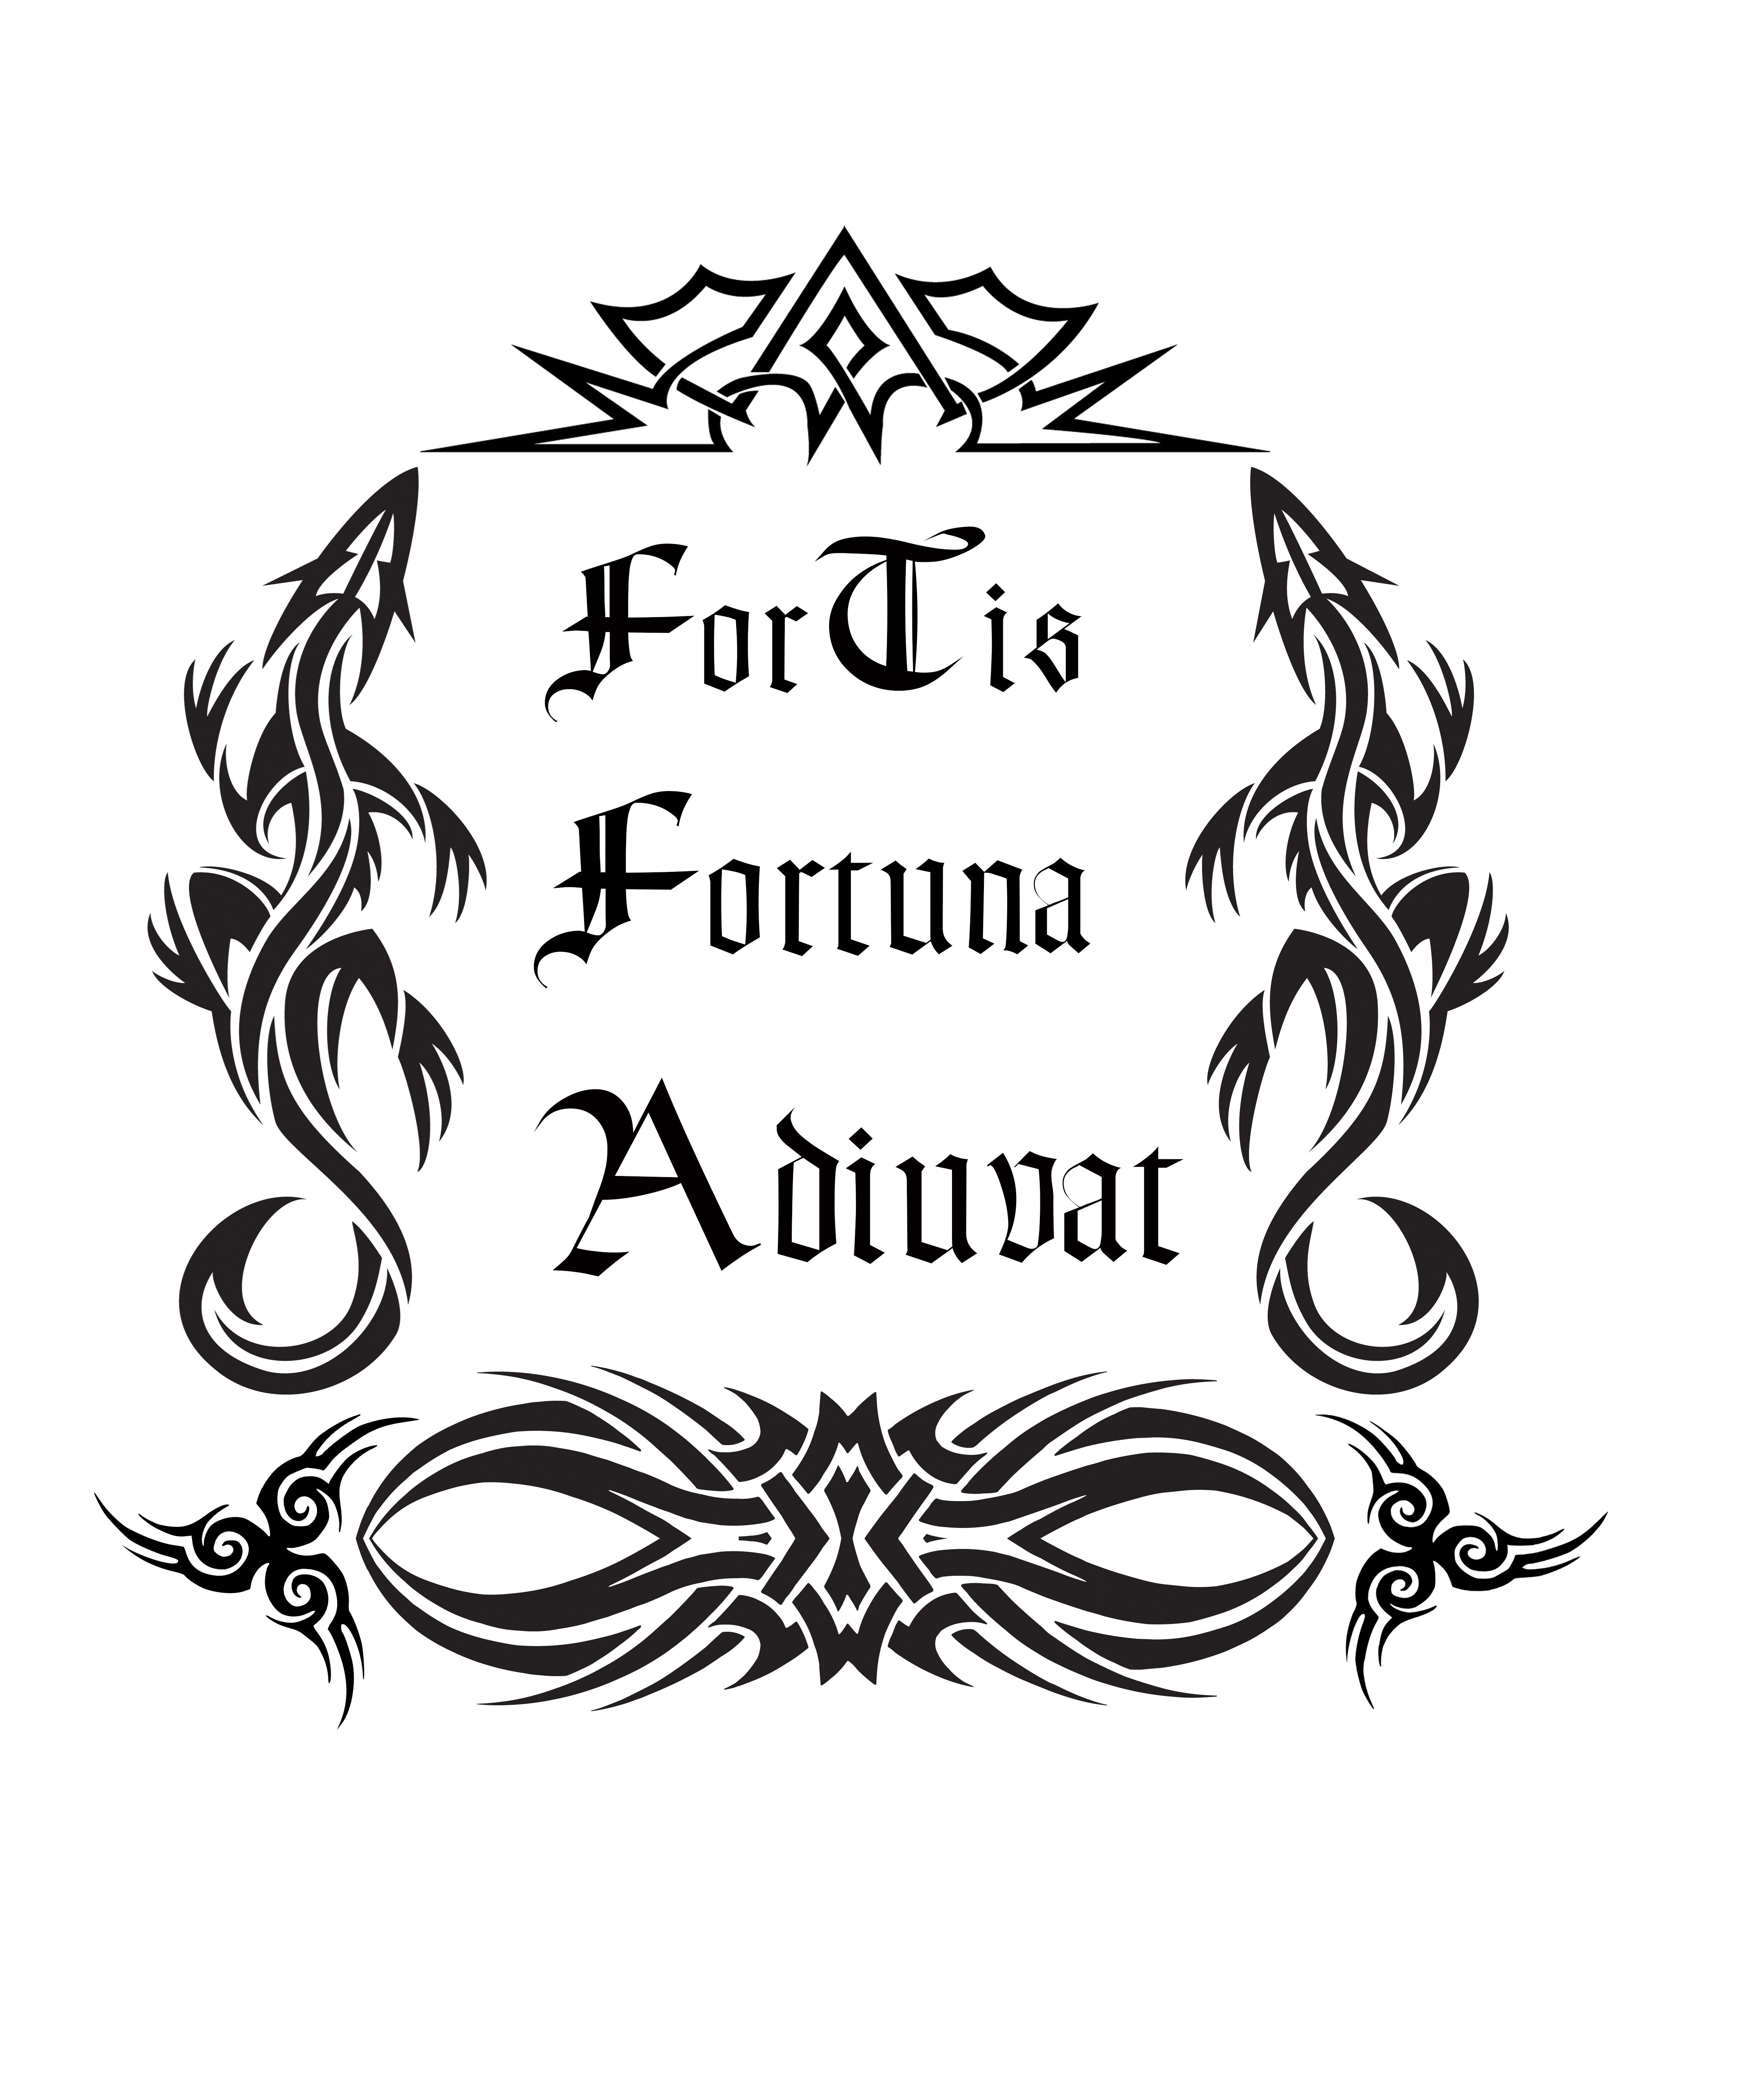 Татуировка Fortis Fortuna Adiuvat